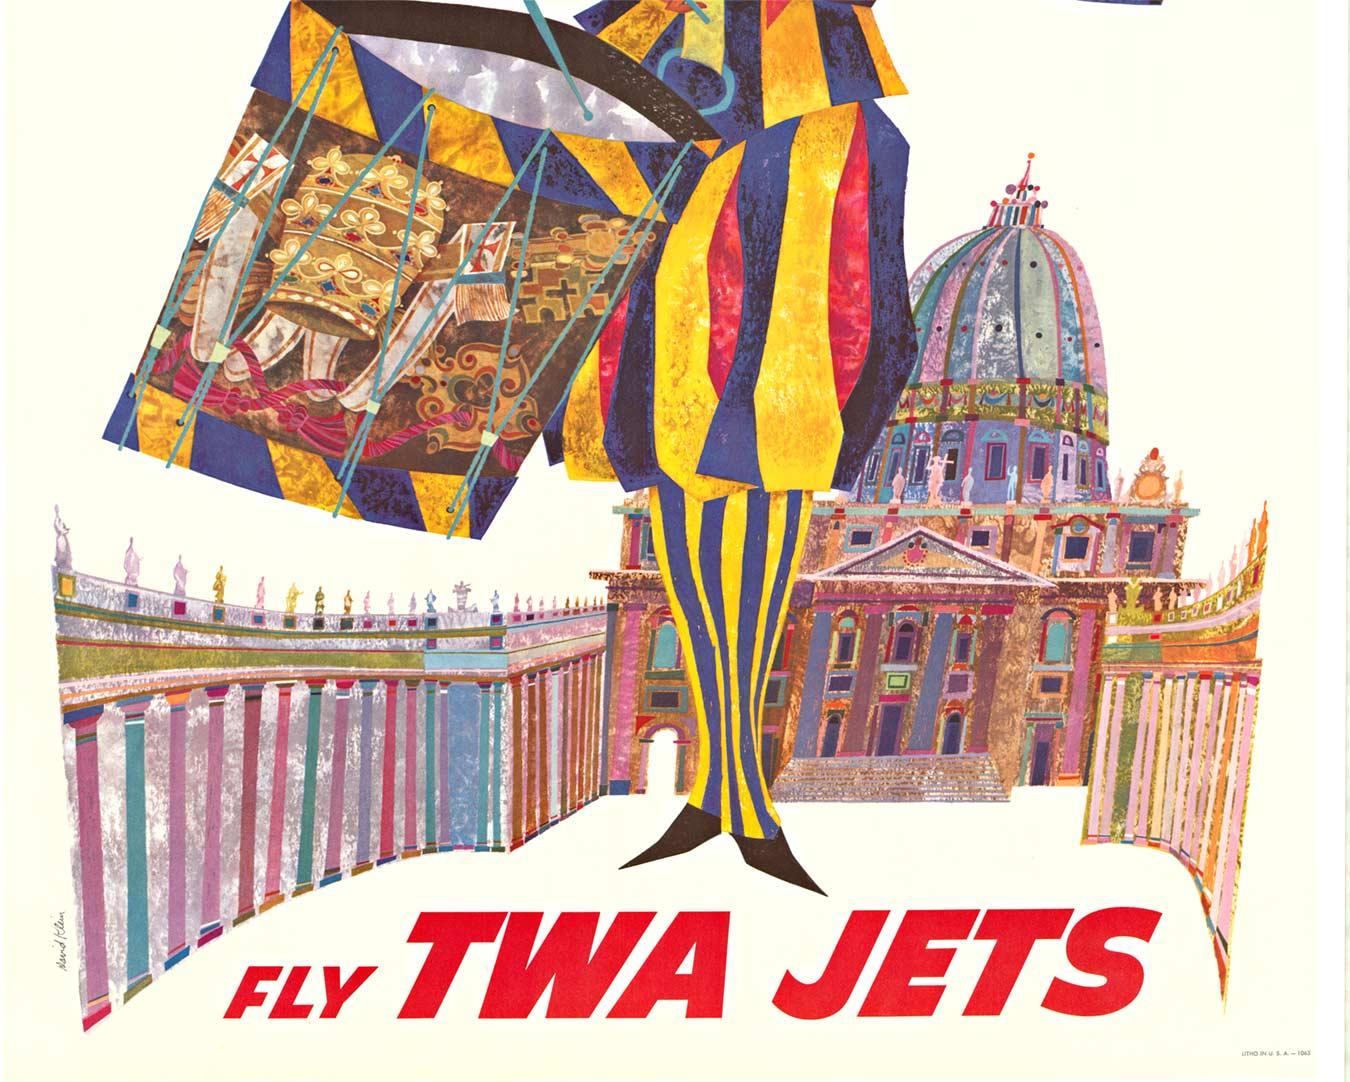 Original Rome Fly TWA Jets vintage American travel poster - American Modern Print by David Klein